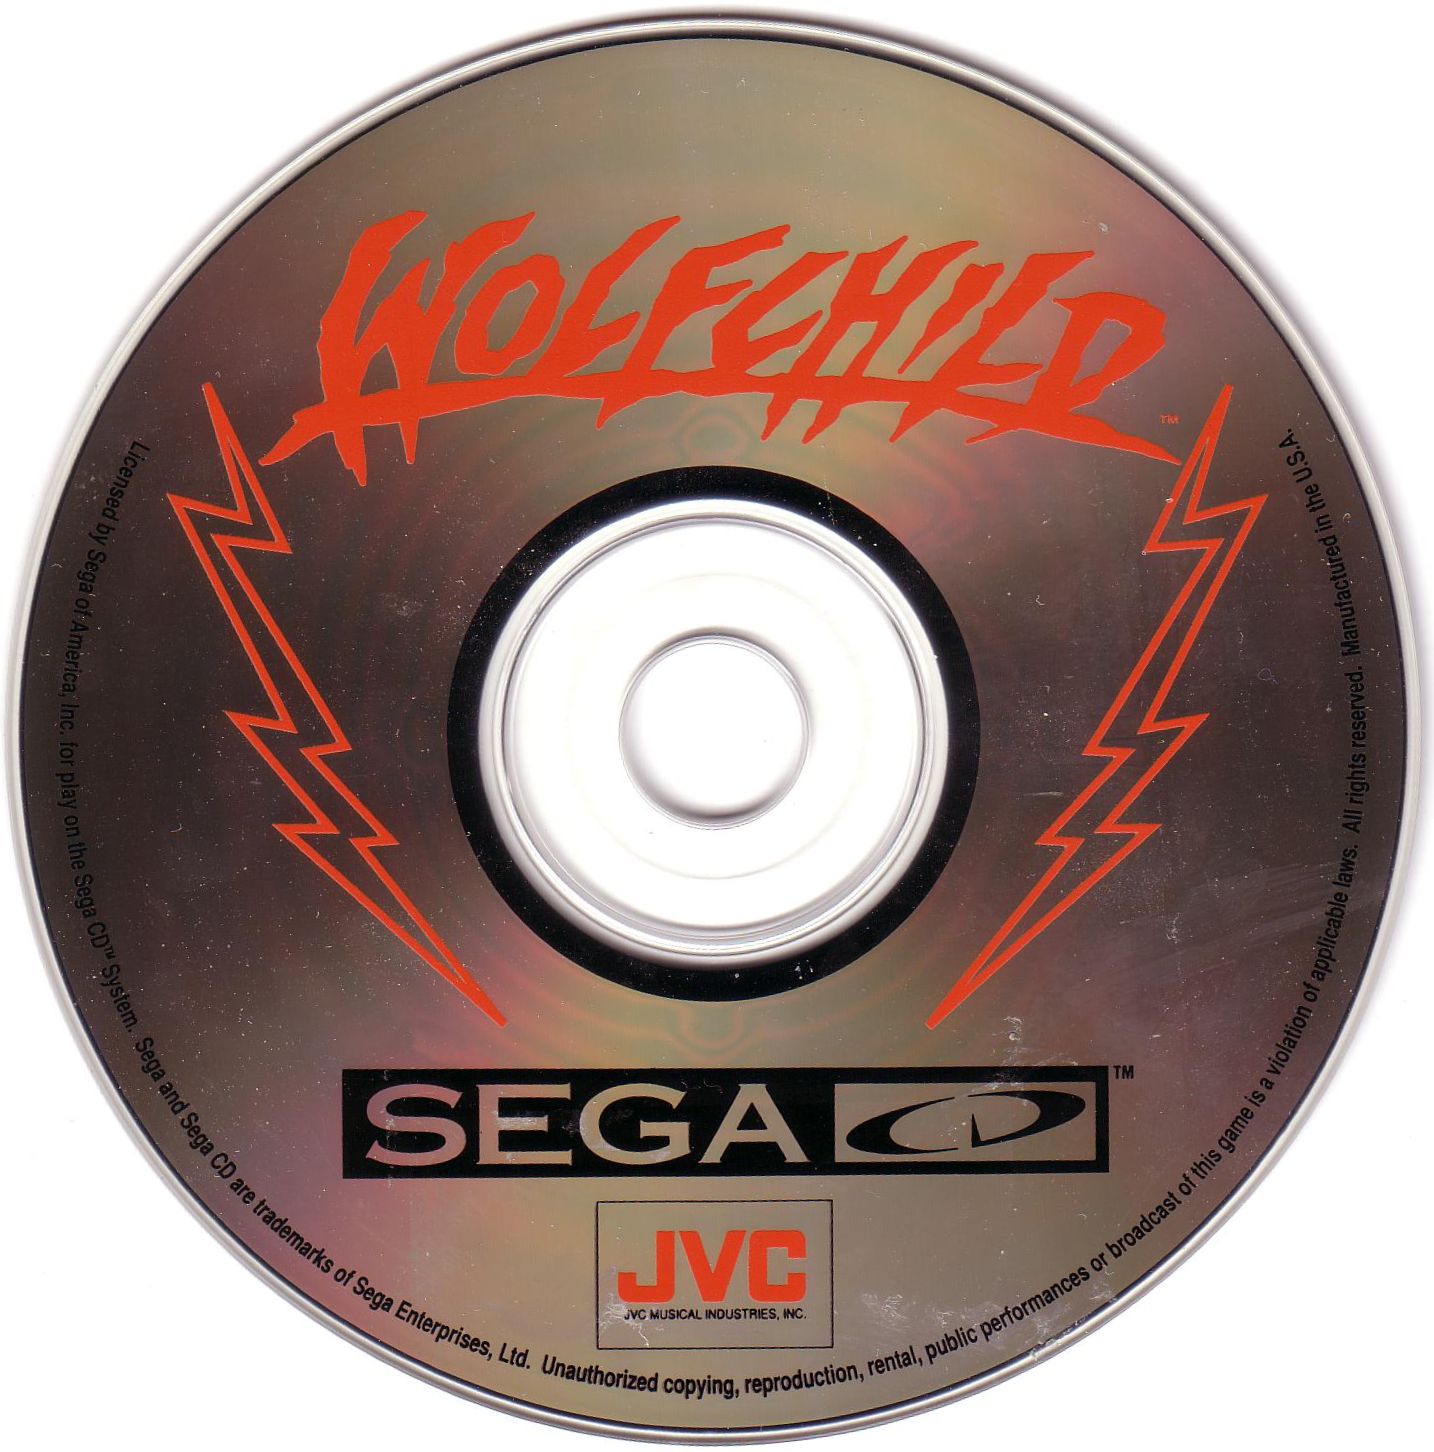 Sega Mega CD Disc Scans w Game Covers Box Scans Box Art CD Labels Cart Labels1434 x 1452